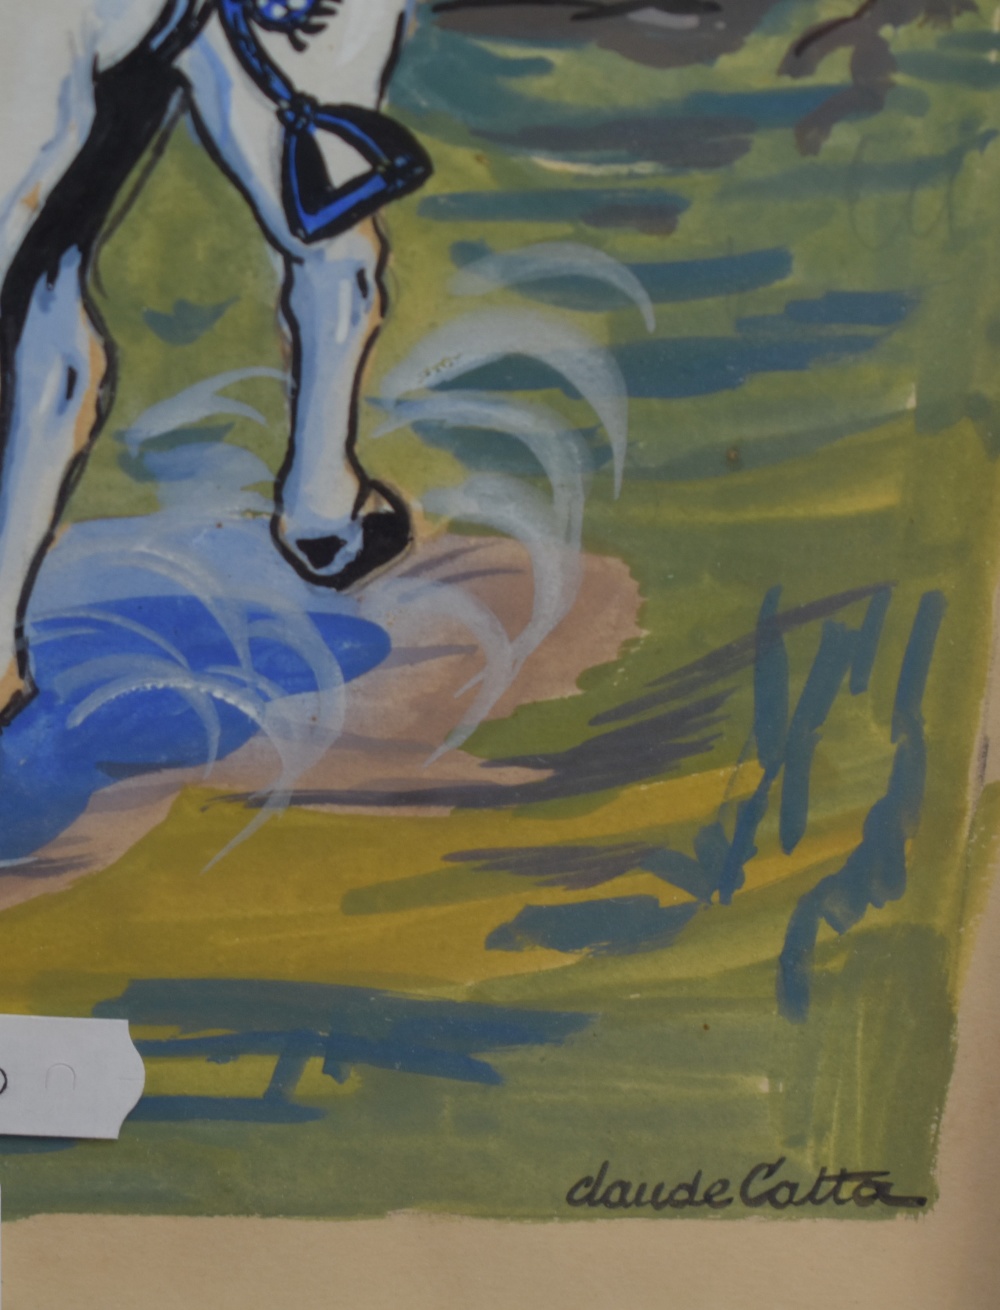 Claude Catta (20th Century), gouache, A comic style interpretation of a cowboy on horseback reaching - Image 3 of 4